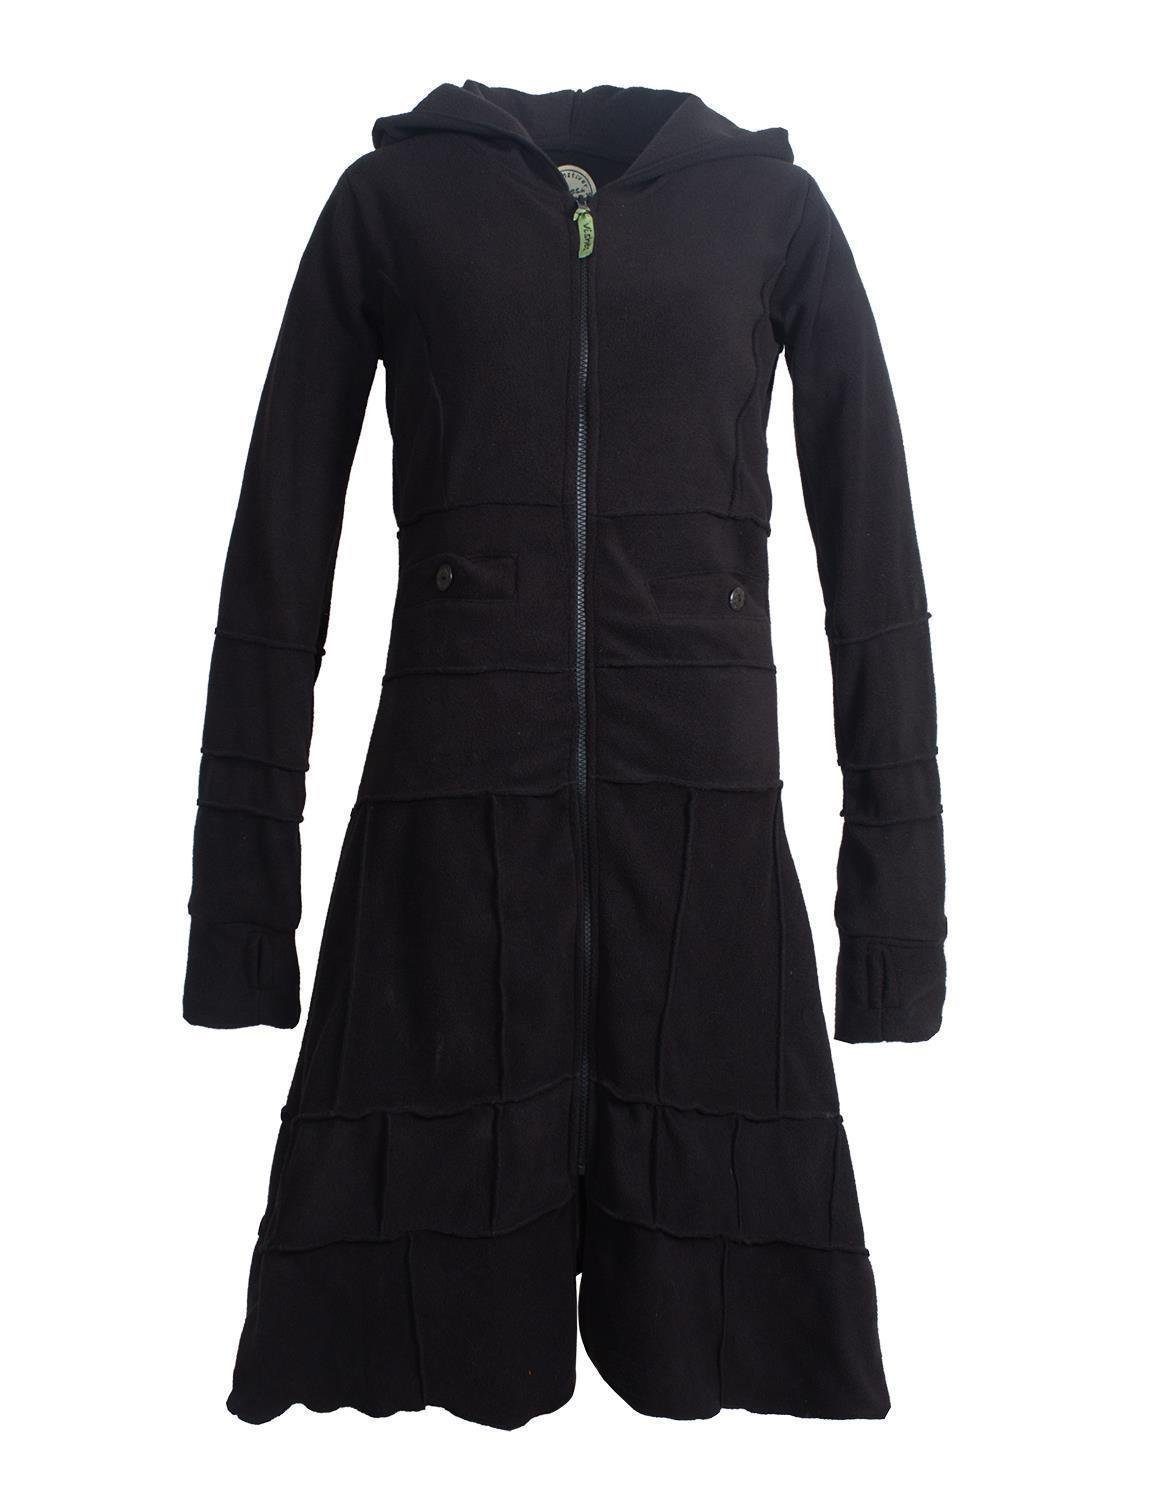 Vishes Kurzmantel Langer warmer Fleece Wintermantel mit Kapuze Elfen, Goa, Ethno, Gothik Style Schwarz ohne Kragen